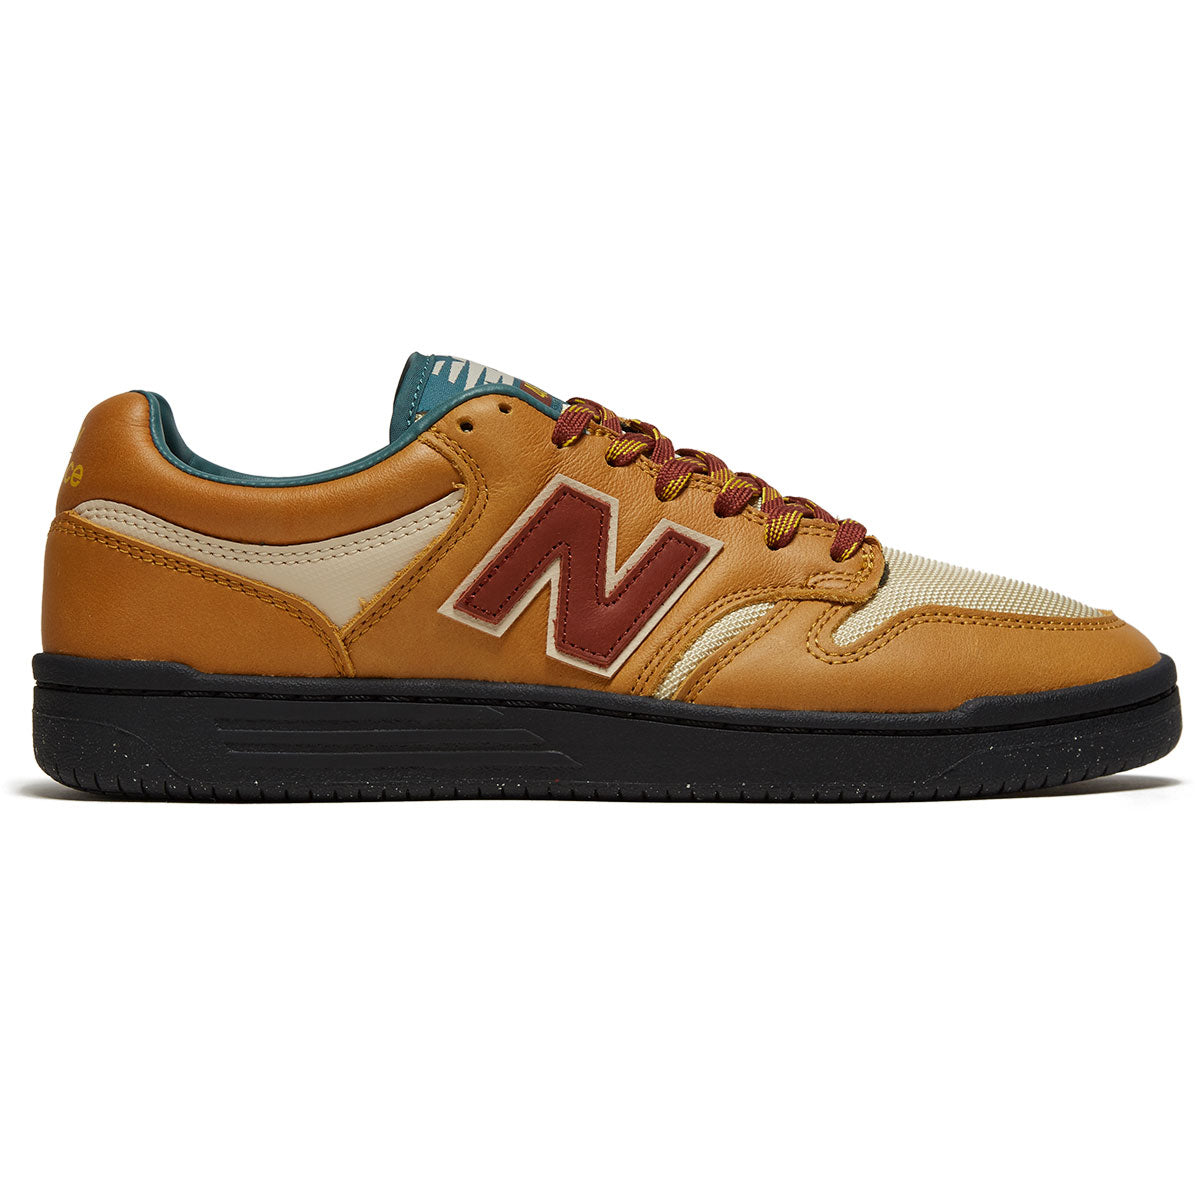 New Balance 480 Shoes - Tan image 1